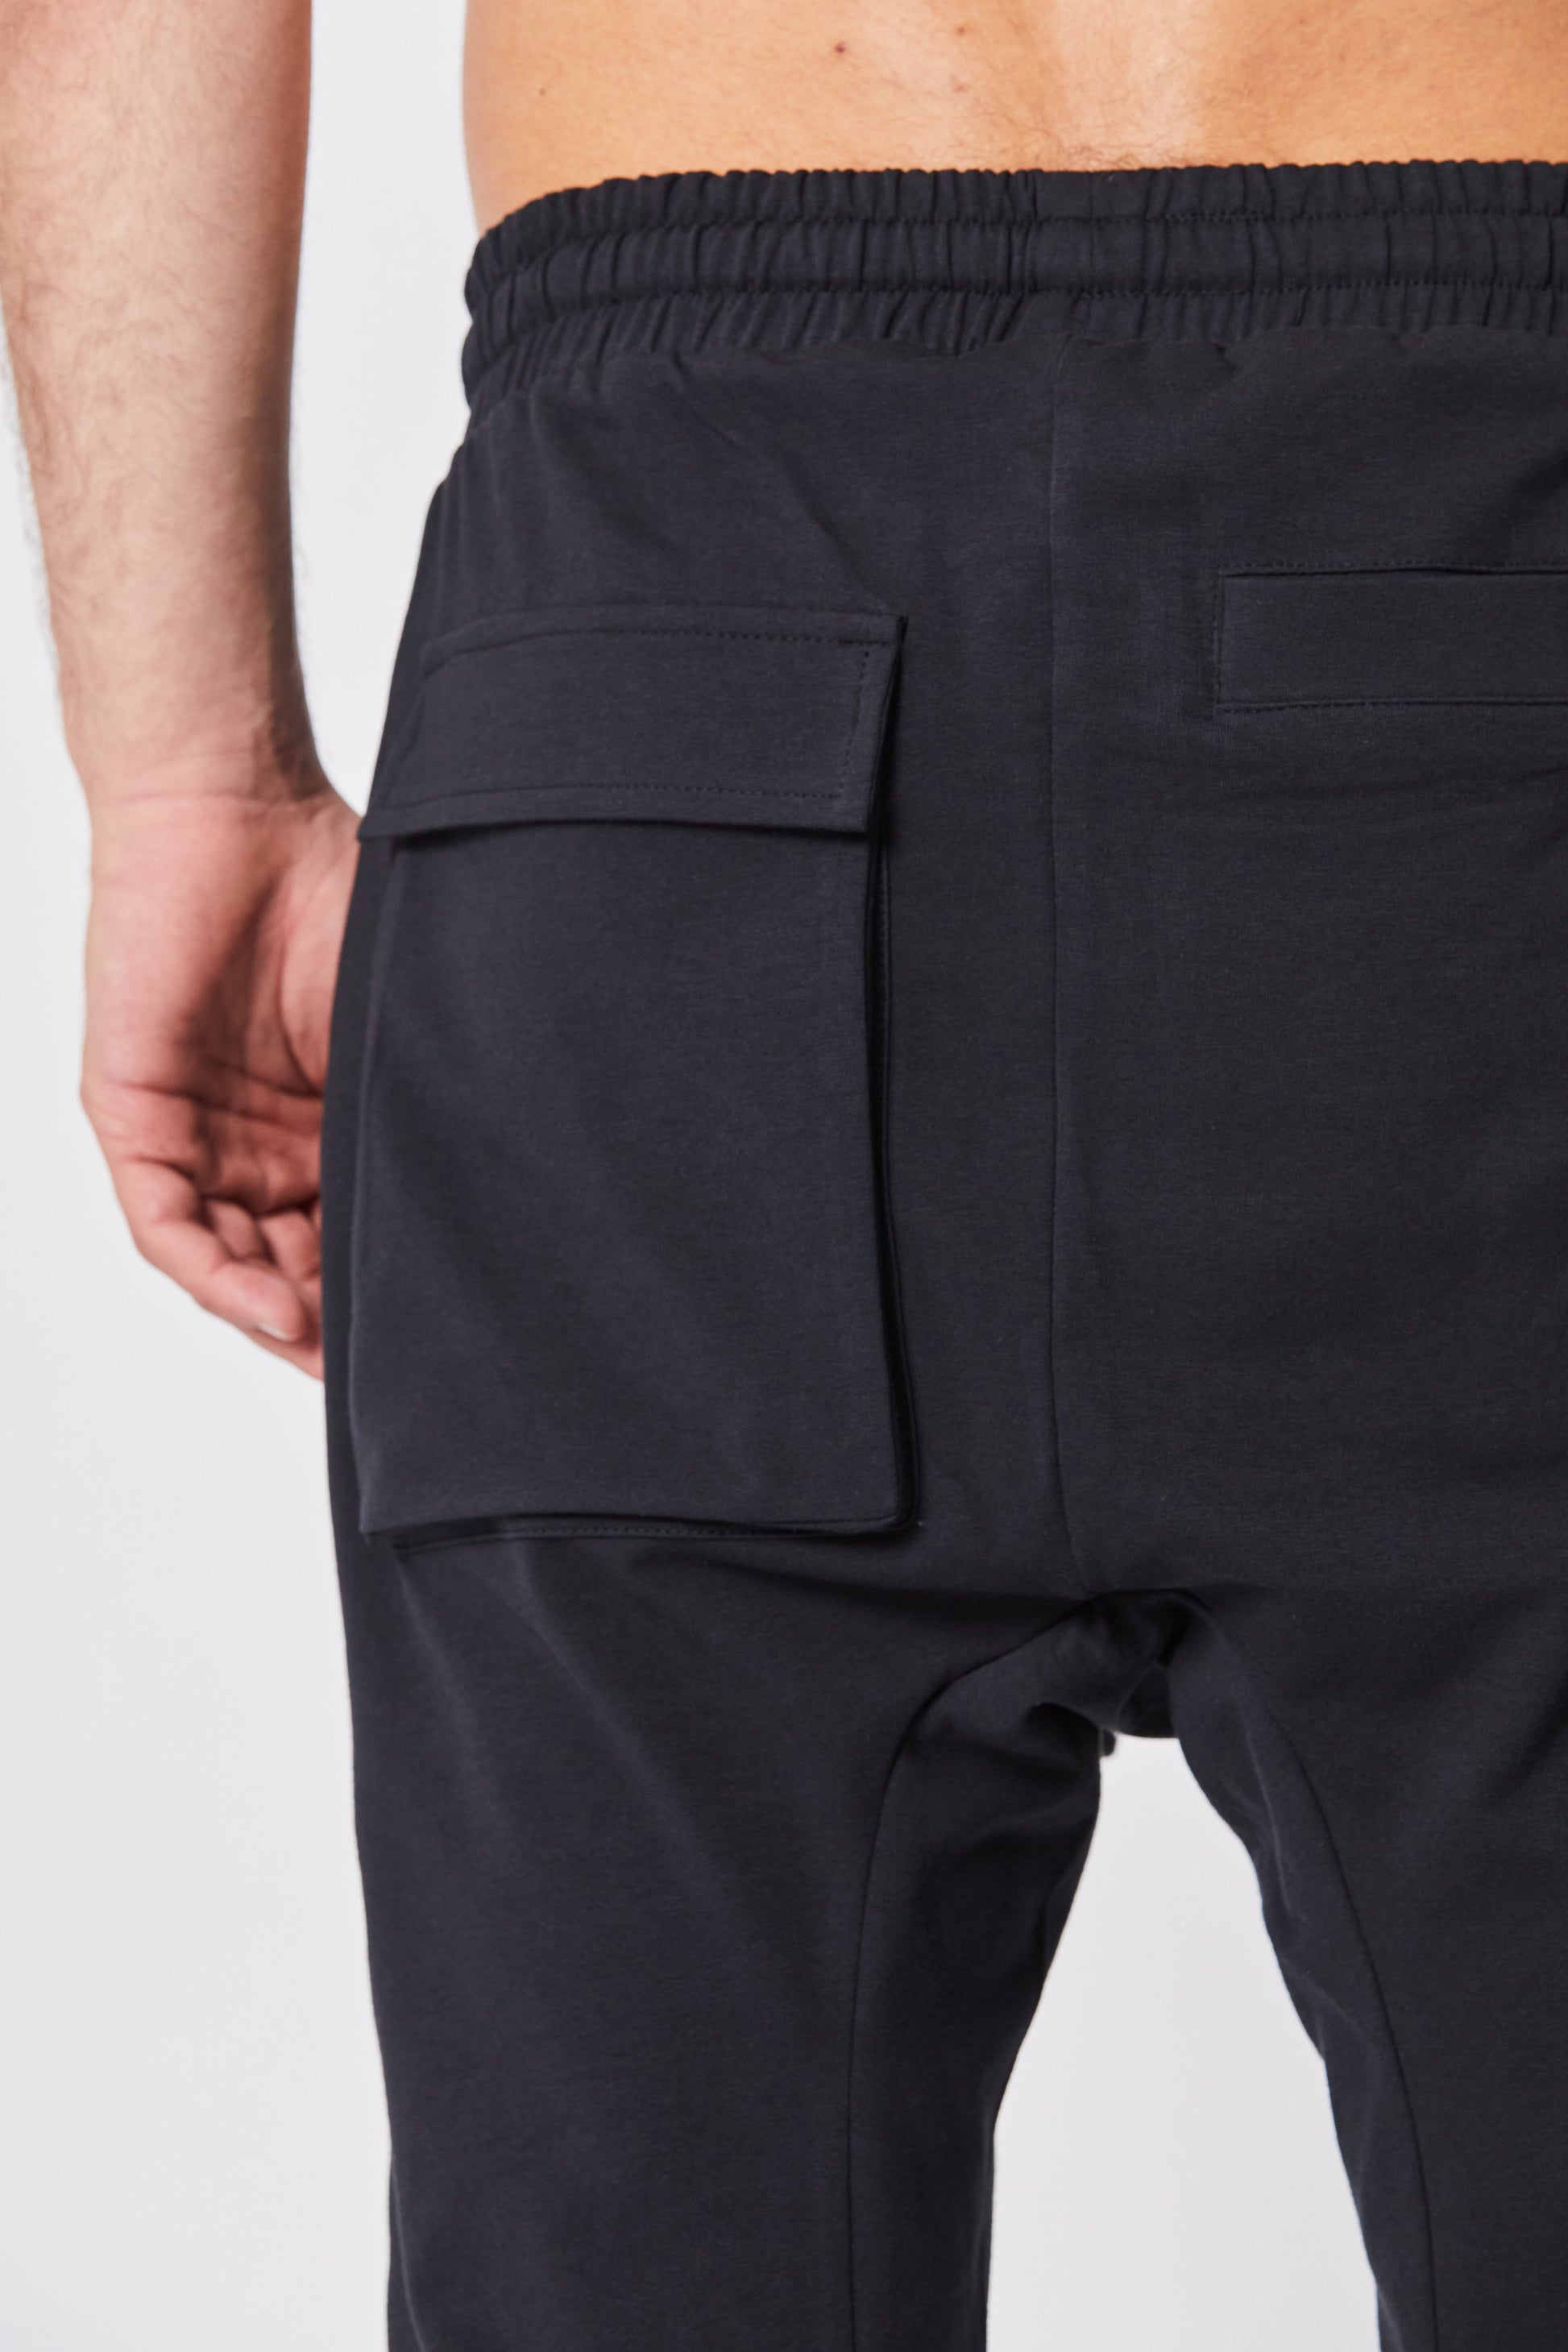 Cotton Archive Crotch 379 MST Stretch Black Modal Drop – The Shorts